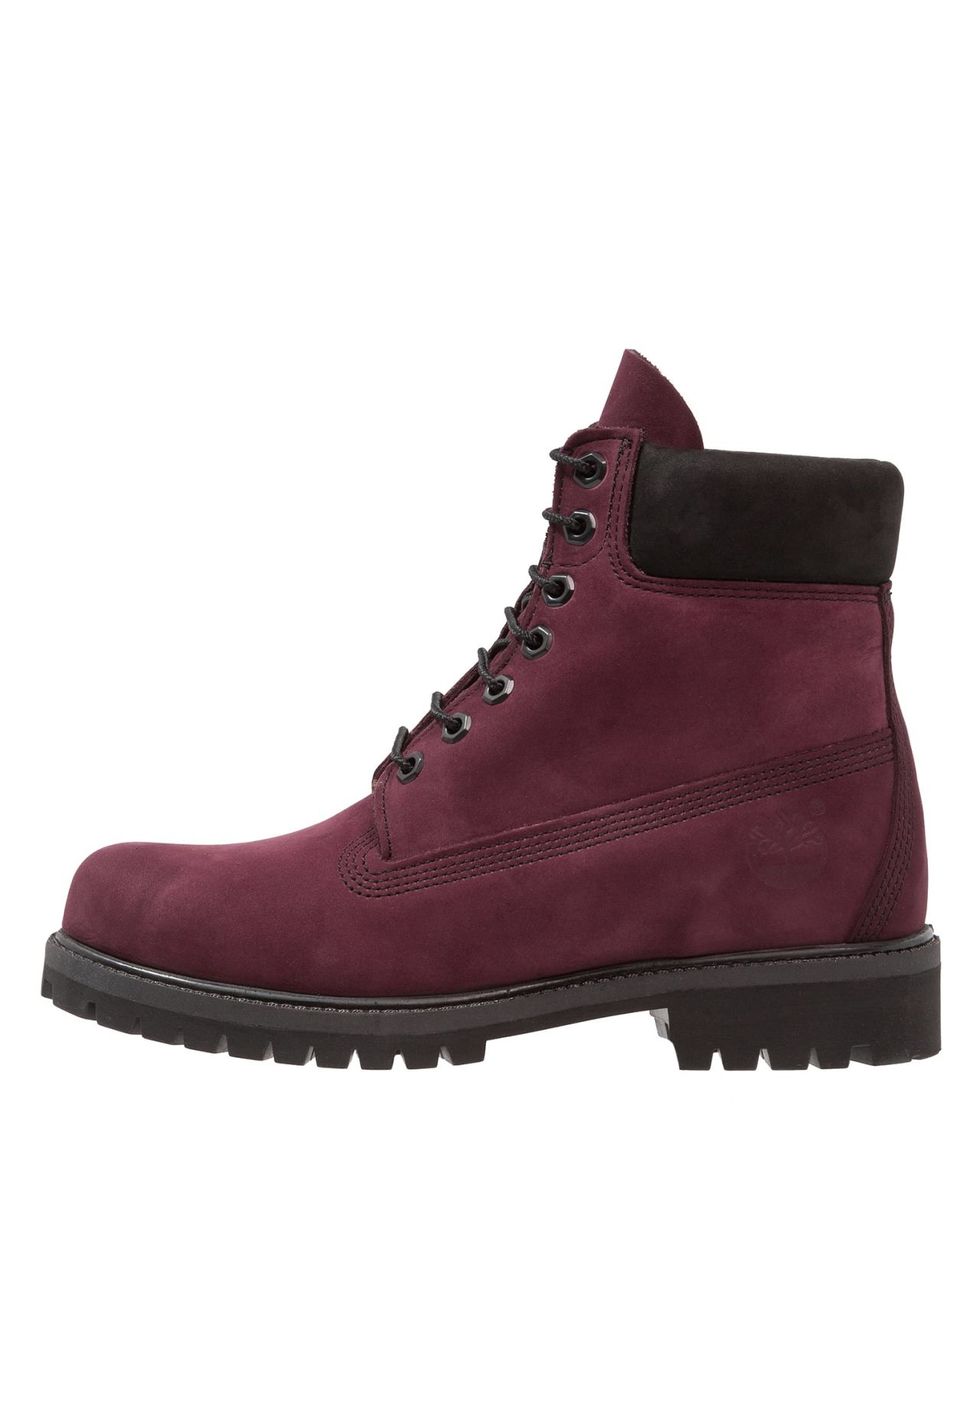 Footwear, Shoe, Boot, Maroon, Brown, Hiking boot, Magenta, Work boots, Outdoor shoe, Snow boot, 